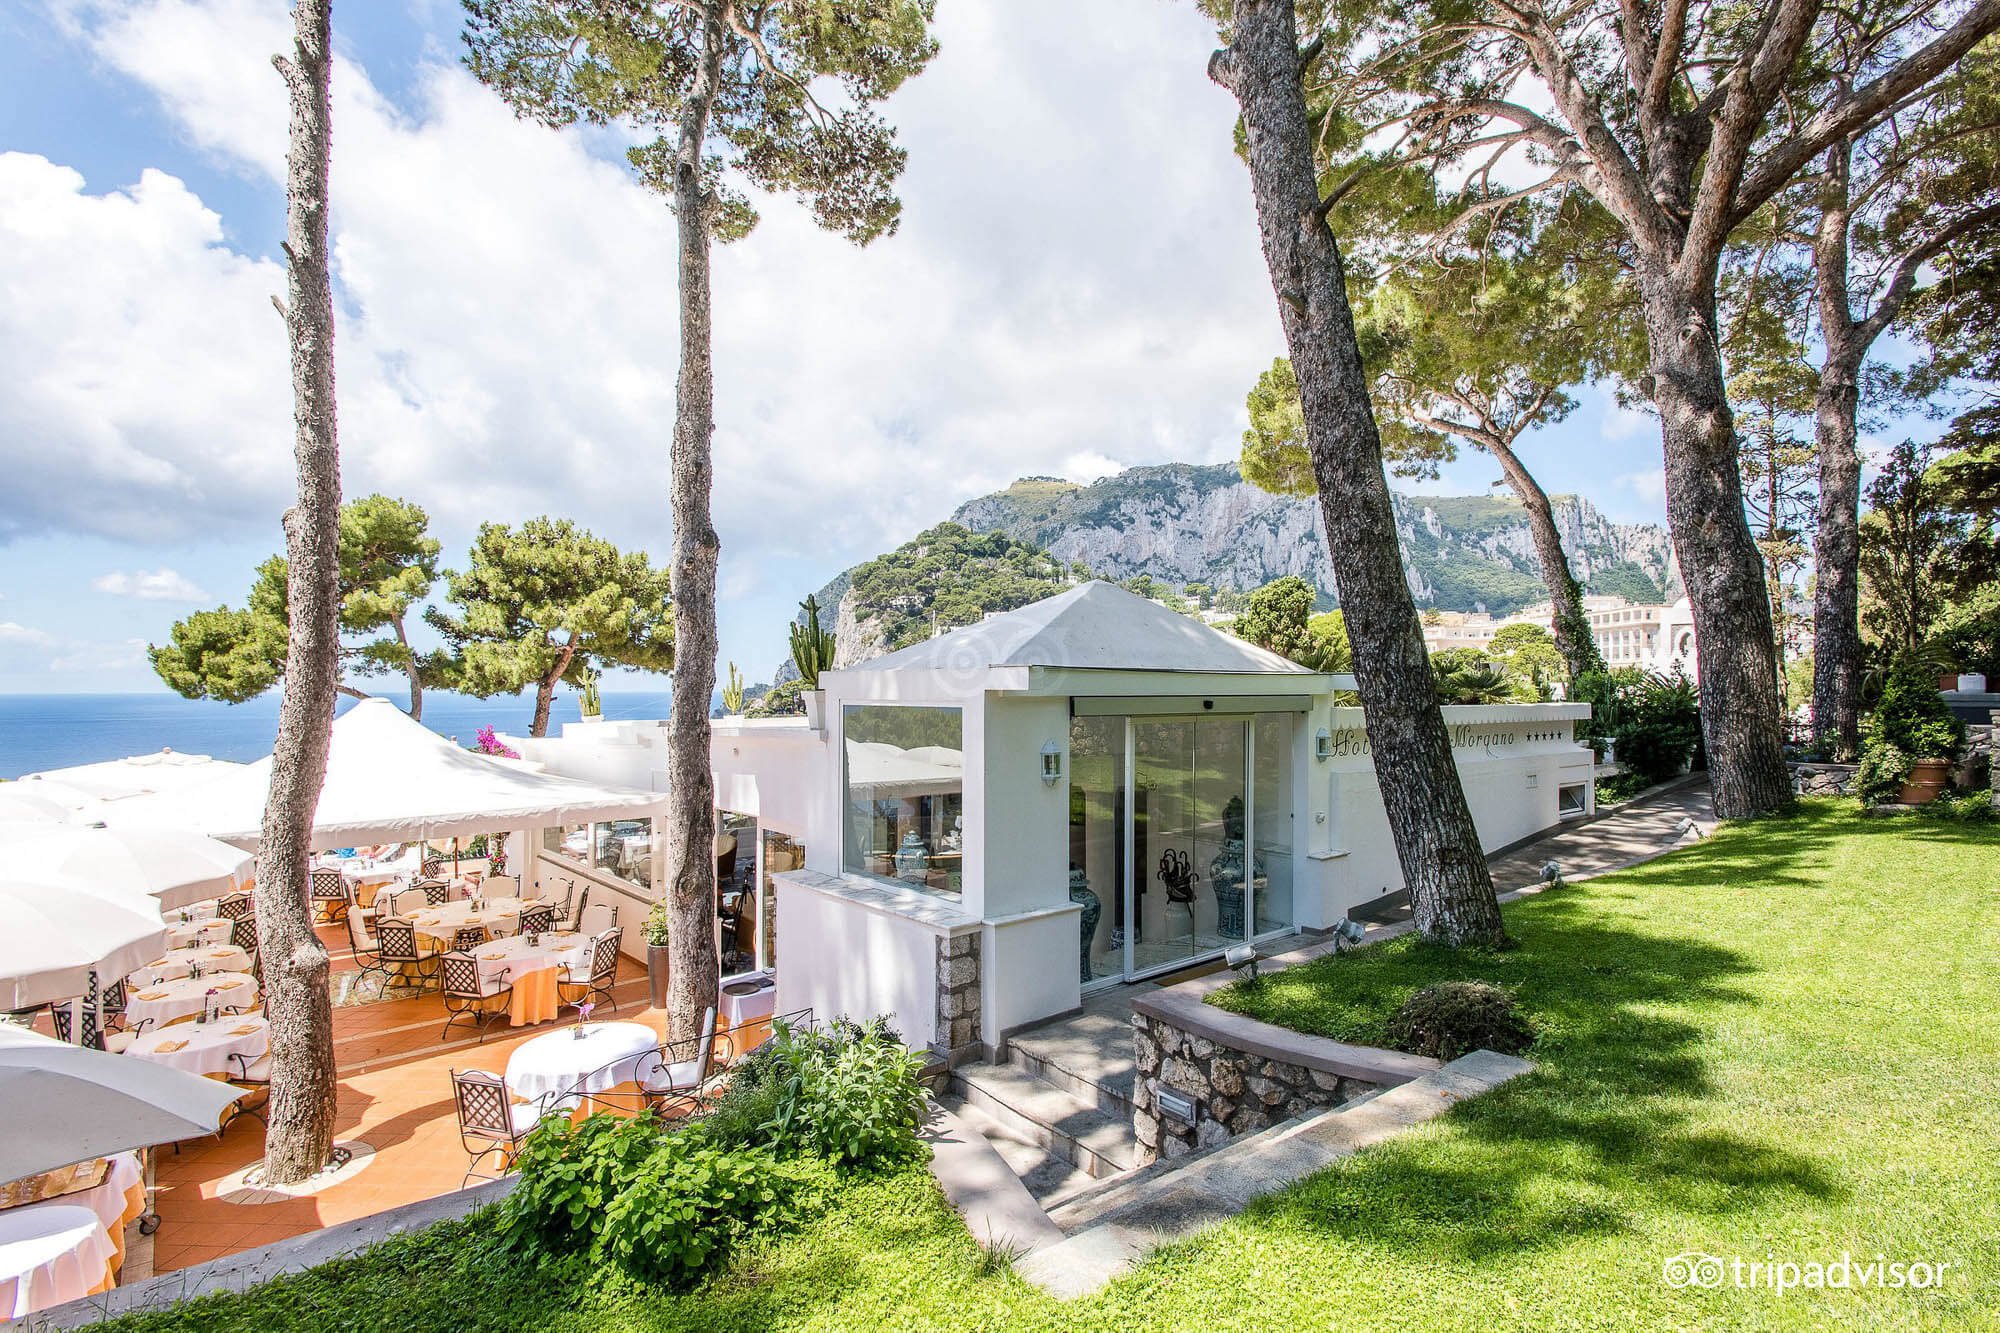 Casa Morgano, 5 star hotel in Capri, is set in a Mediterranean garden